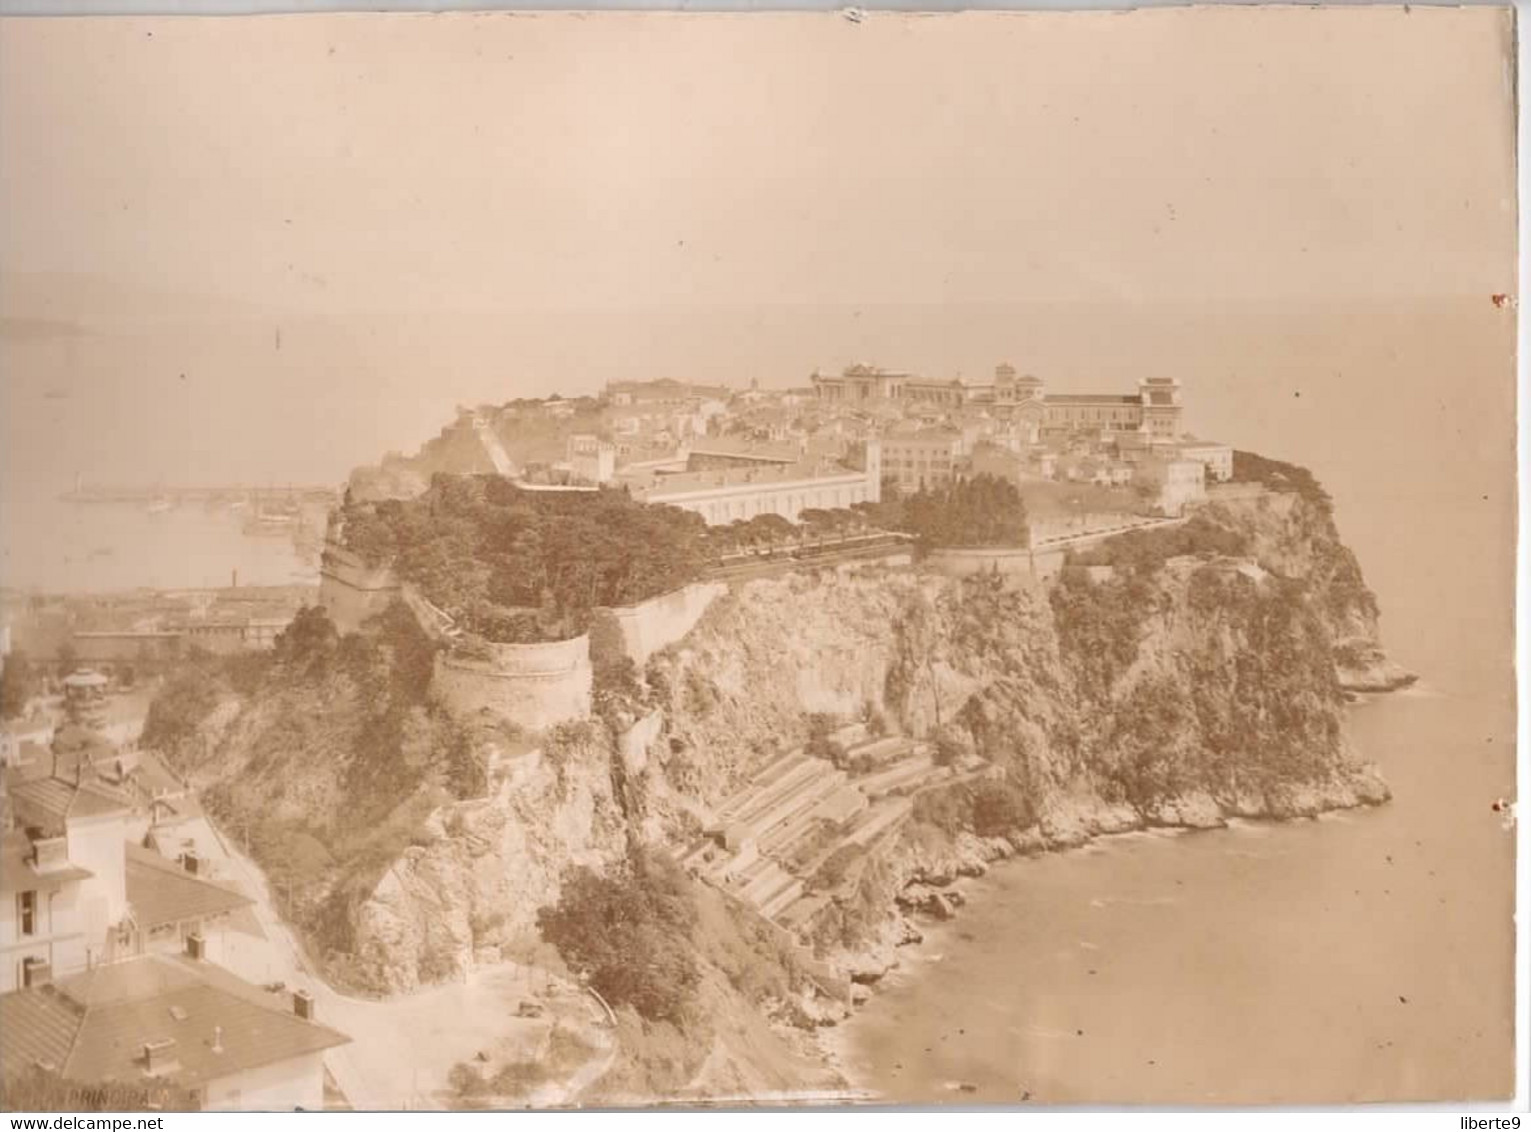 Principaué De Monaco C.1890 Panorama - Grande Photo Sur Carton 21x56cm - Old (before 1900)